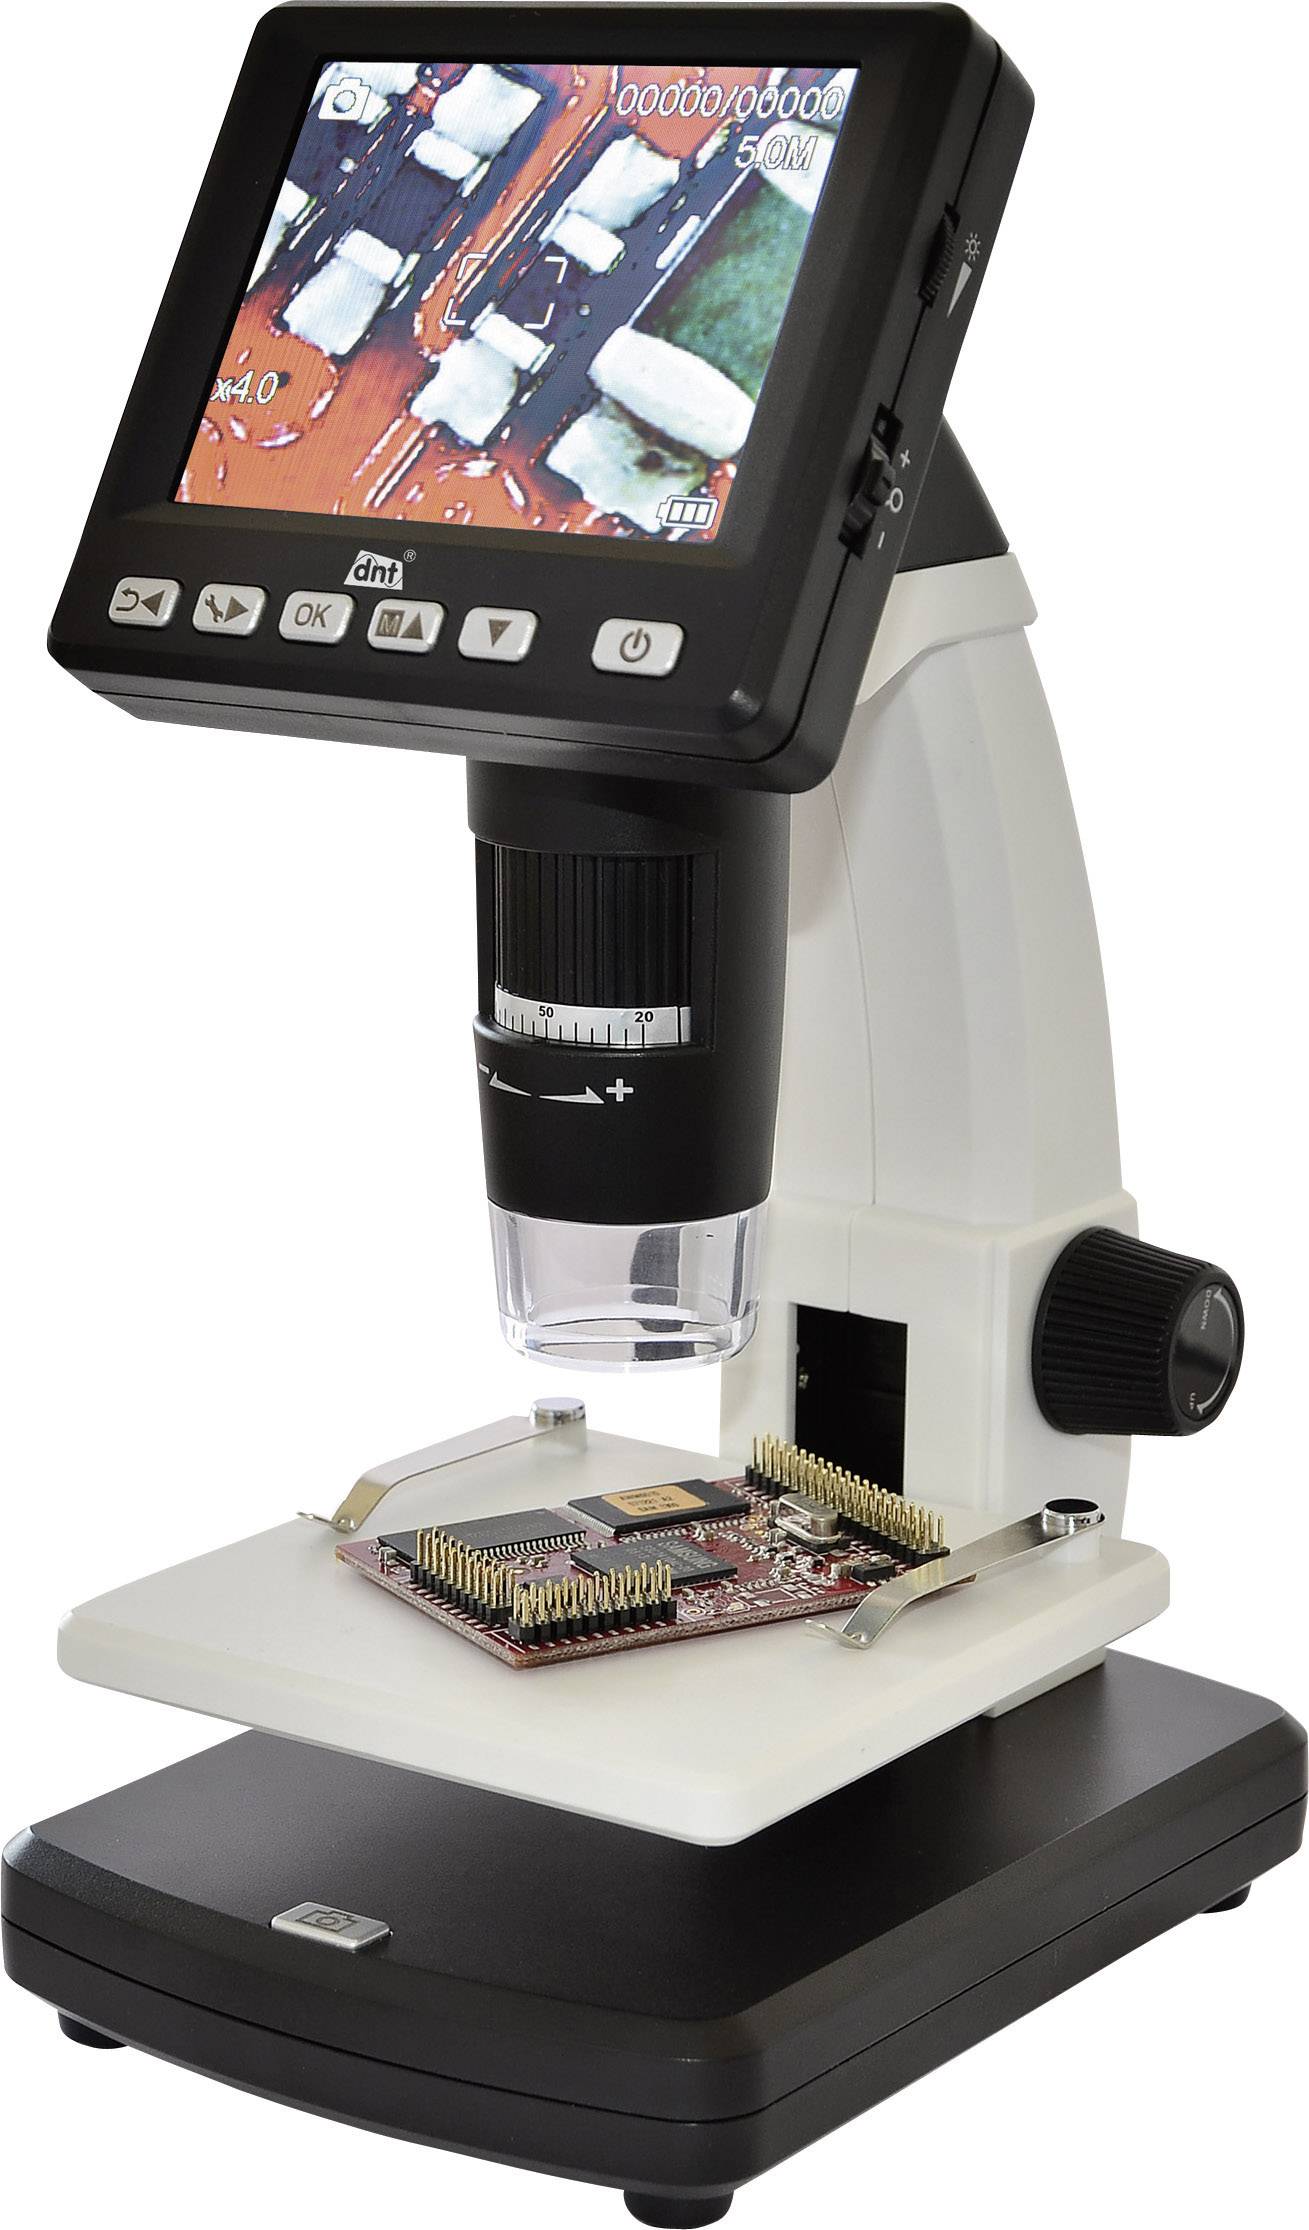 digi microscope windows 10 software